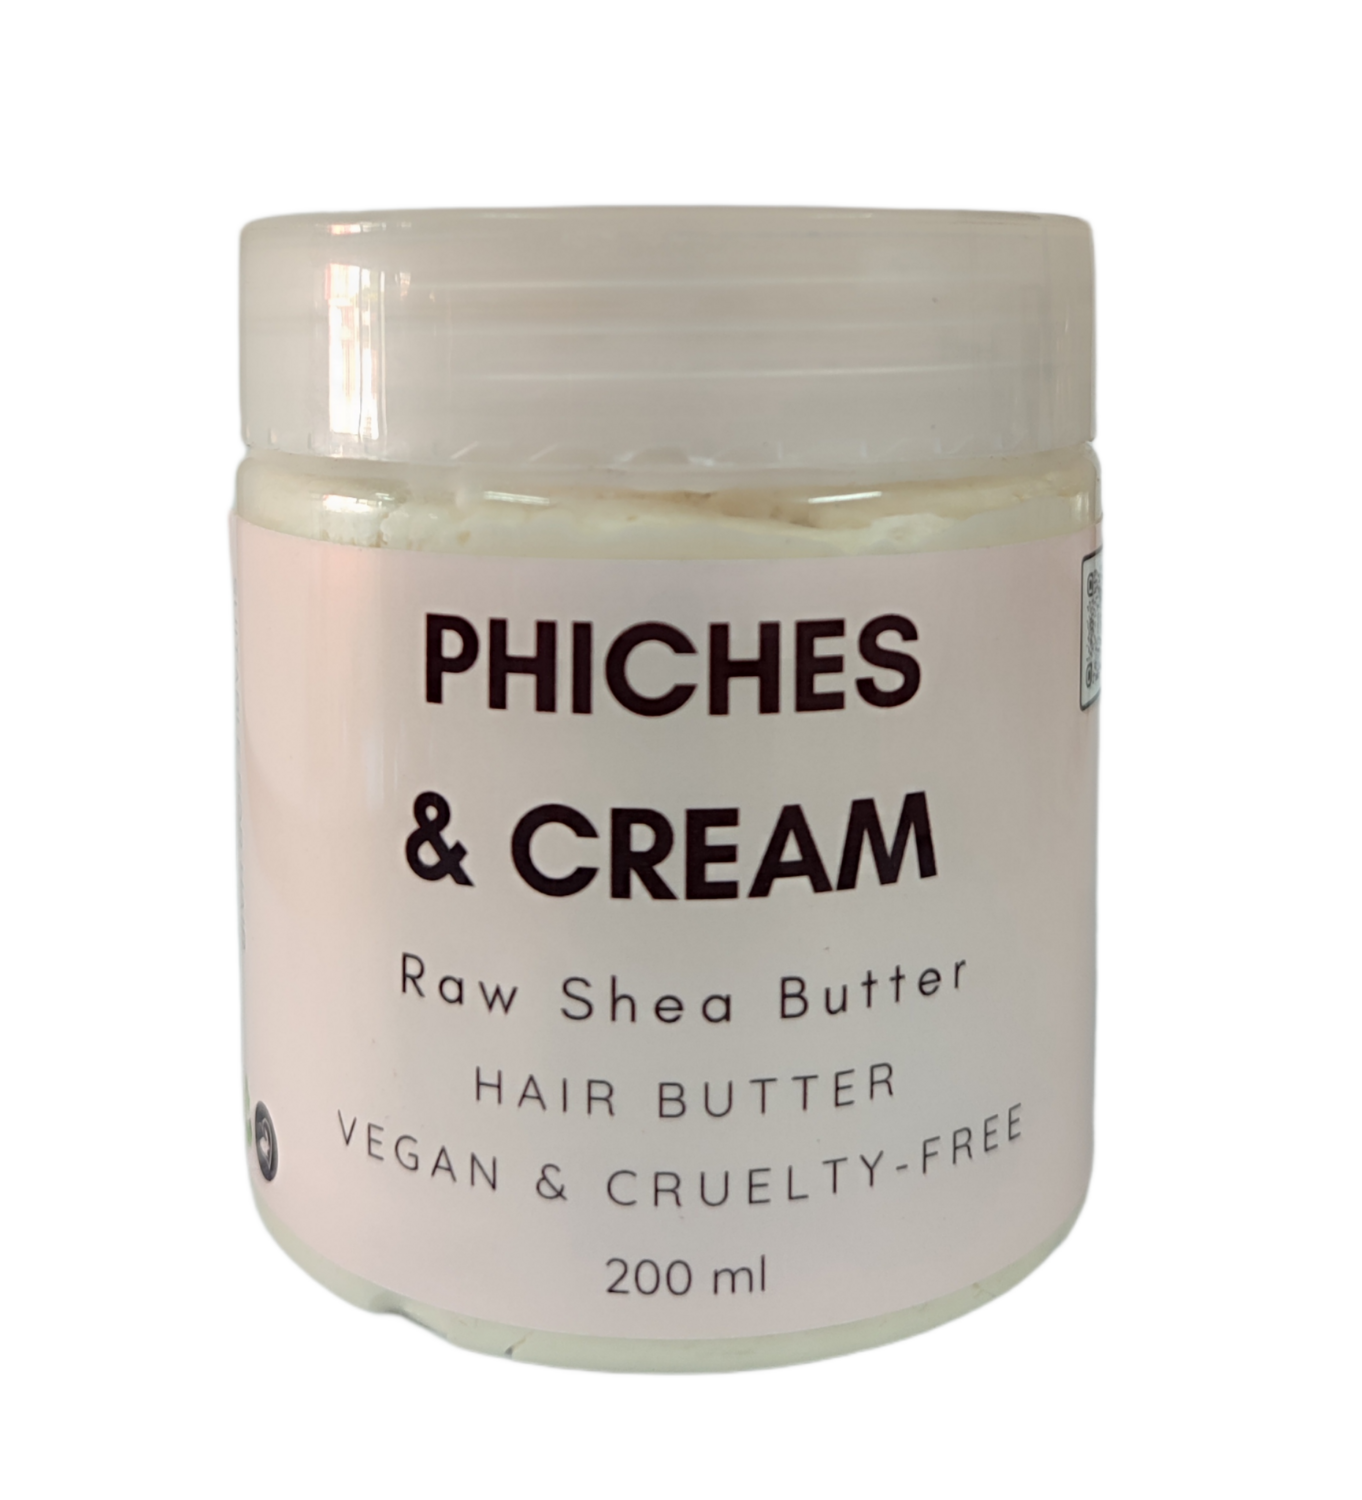 Phiches & Cream Raw Shea Butter Hair Butter